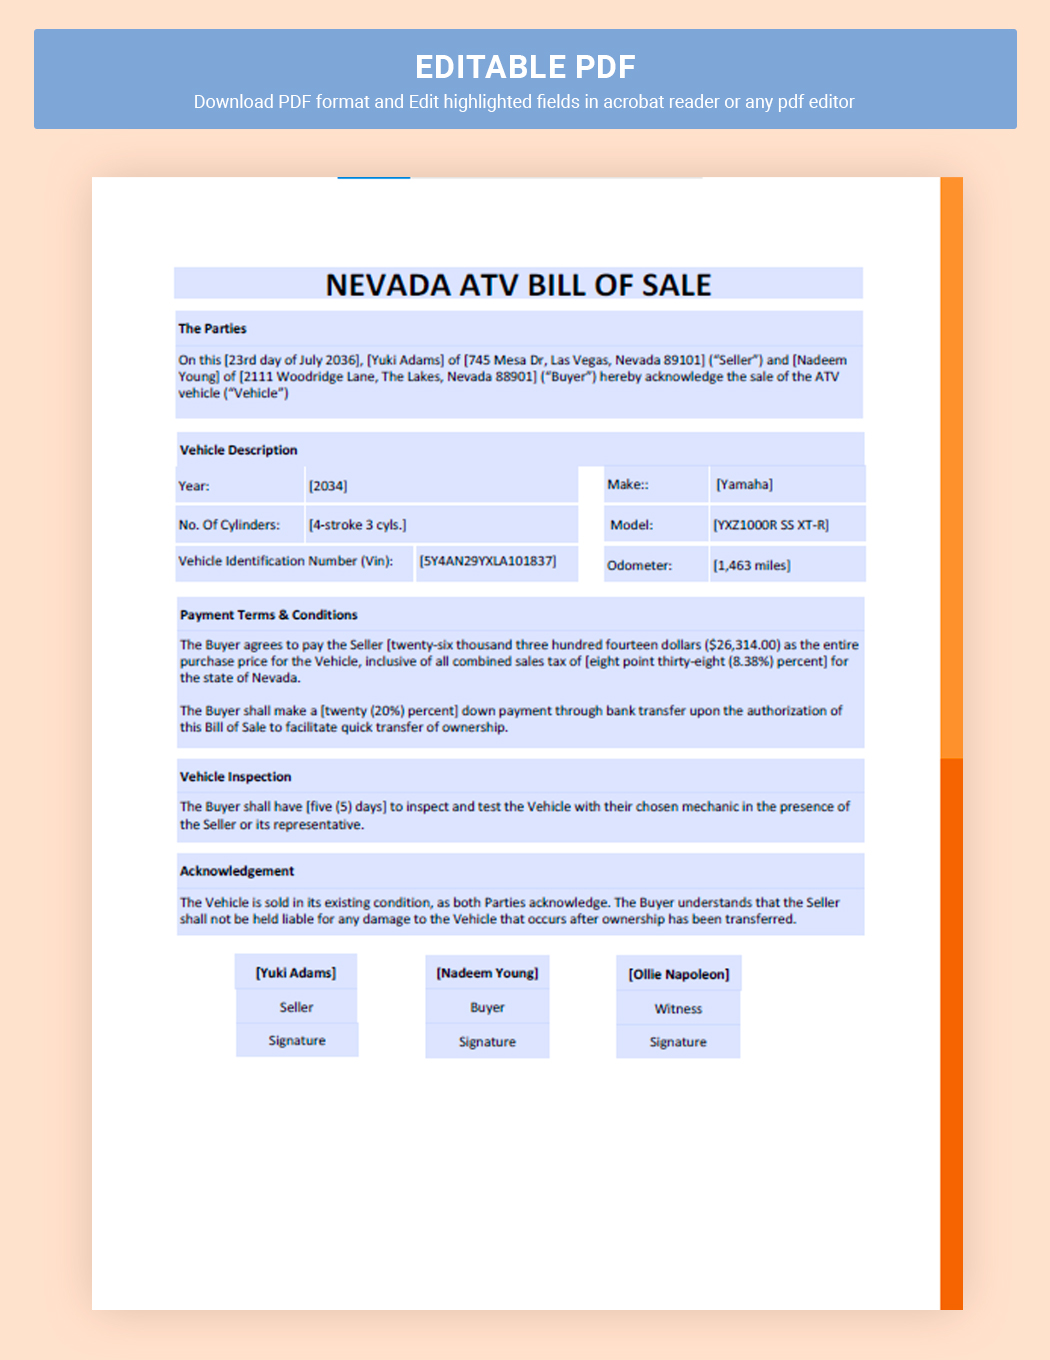 Nevada ATV Bill Of Sale Template